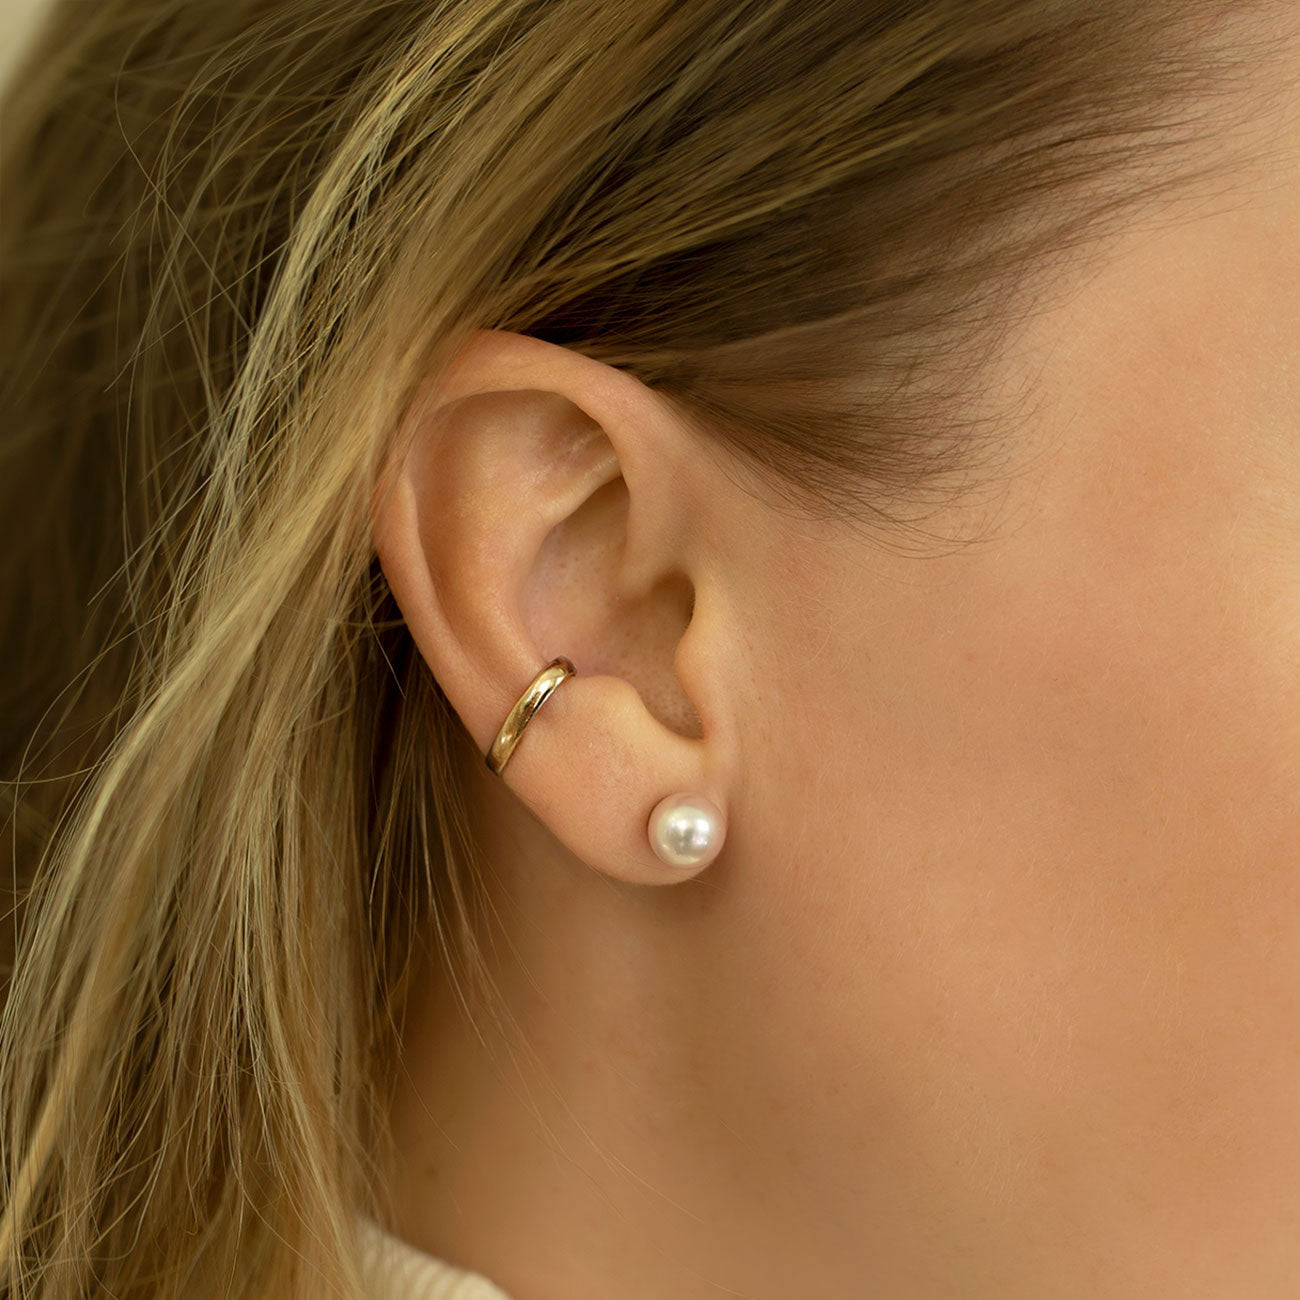 Pearl Studs - Pearl Stud Earrings - The Pearl Girls - Made in USA